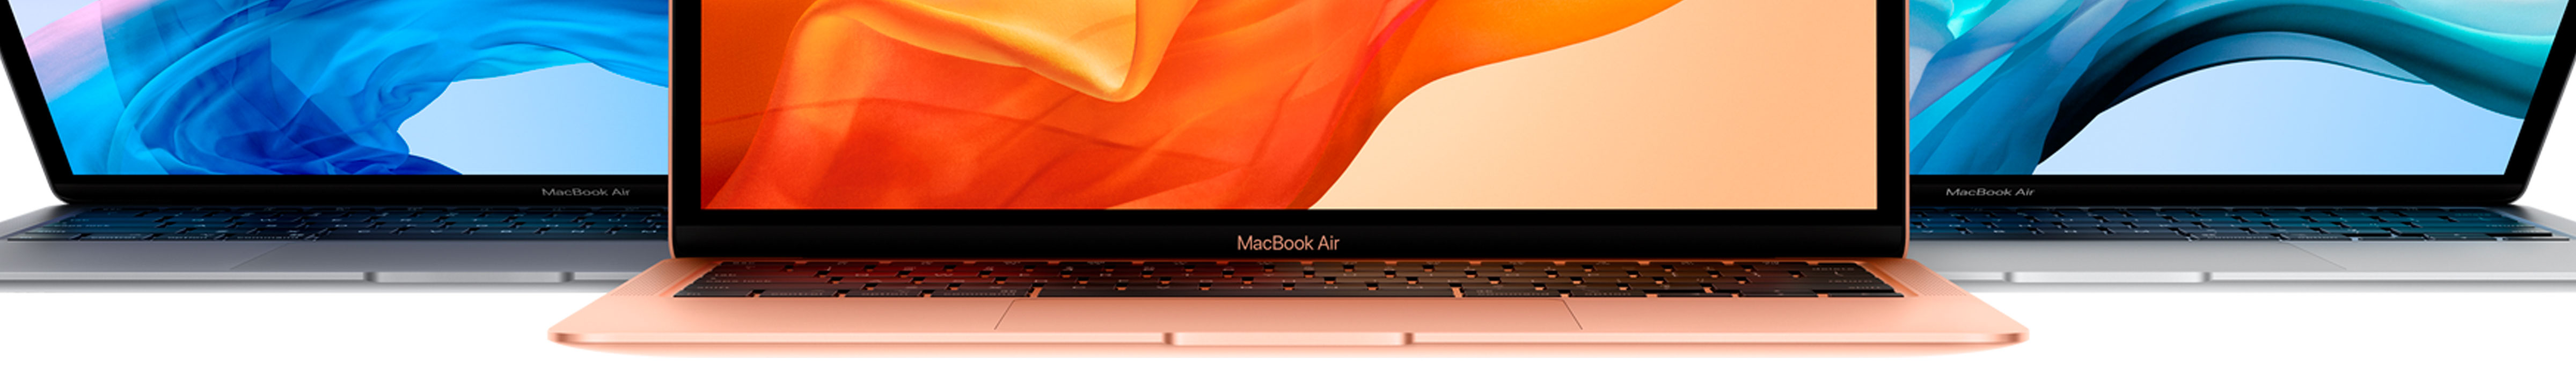 MacBook Air 13-inch - refurbished